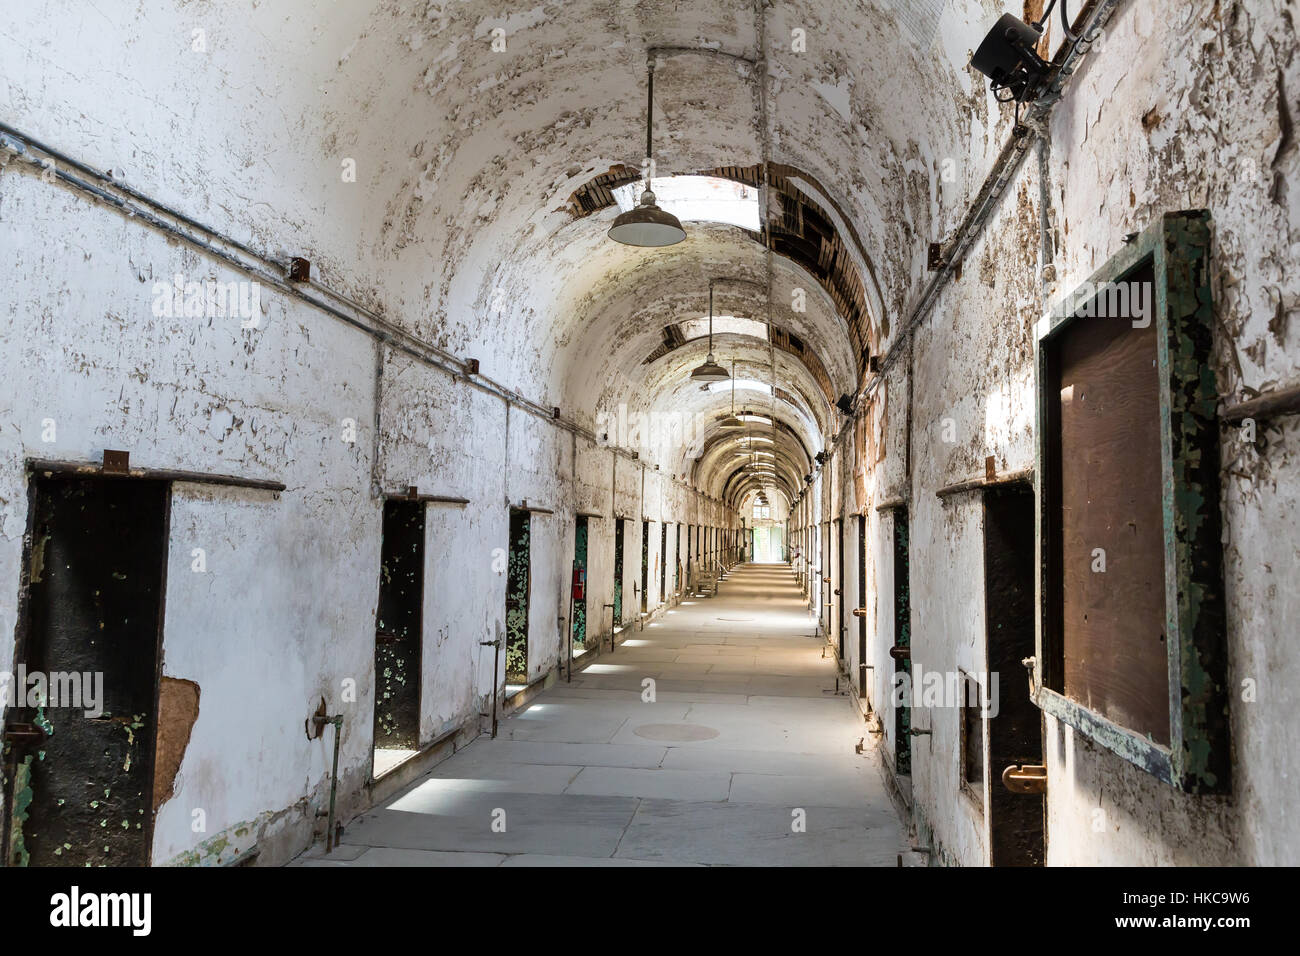 Jail hallway with locked doors. Stock Photo